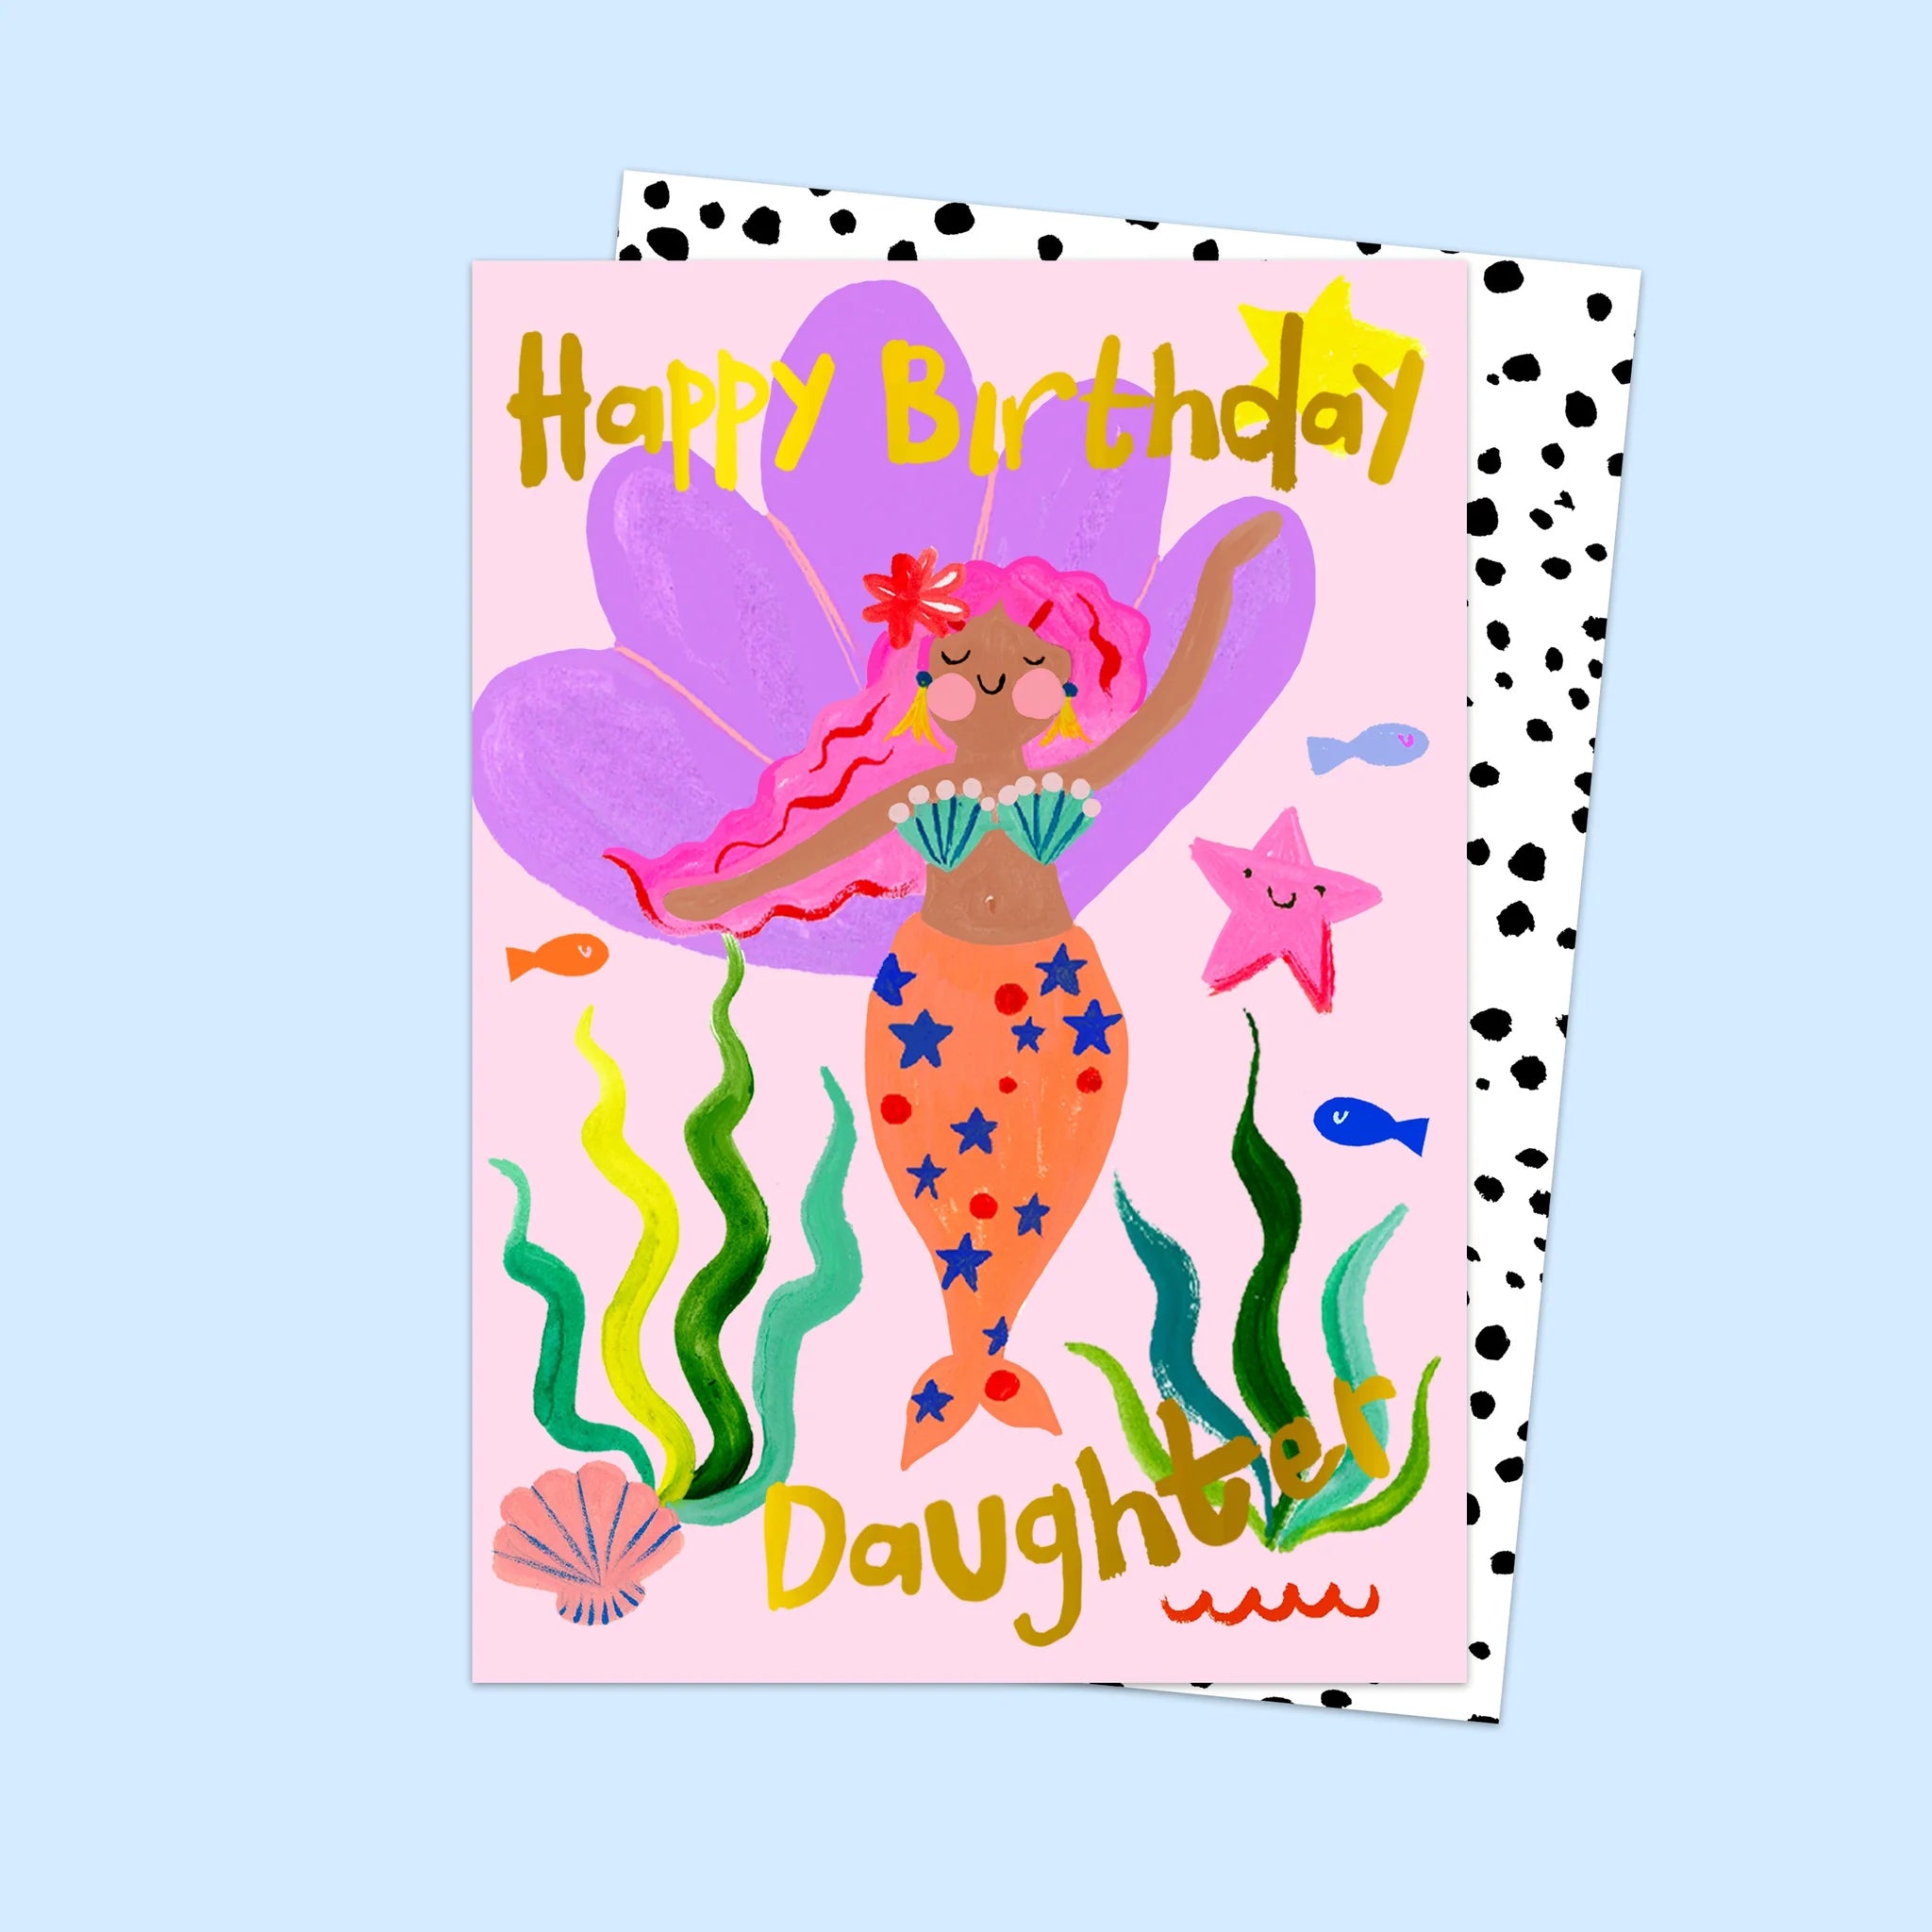 HAPPY BIRTHDAY DAUGHTER MERMAID | CARD BY ELEANOR BOWMER